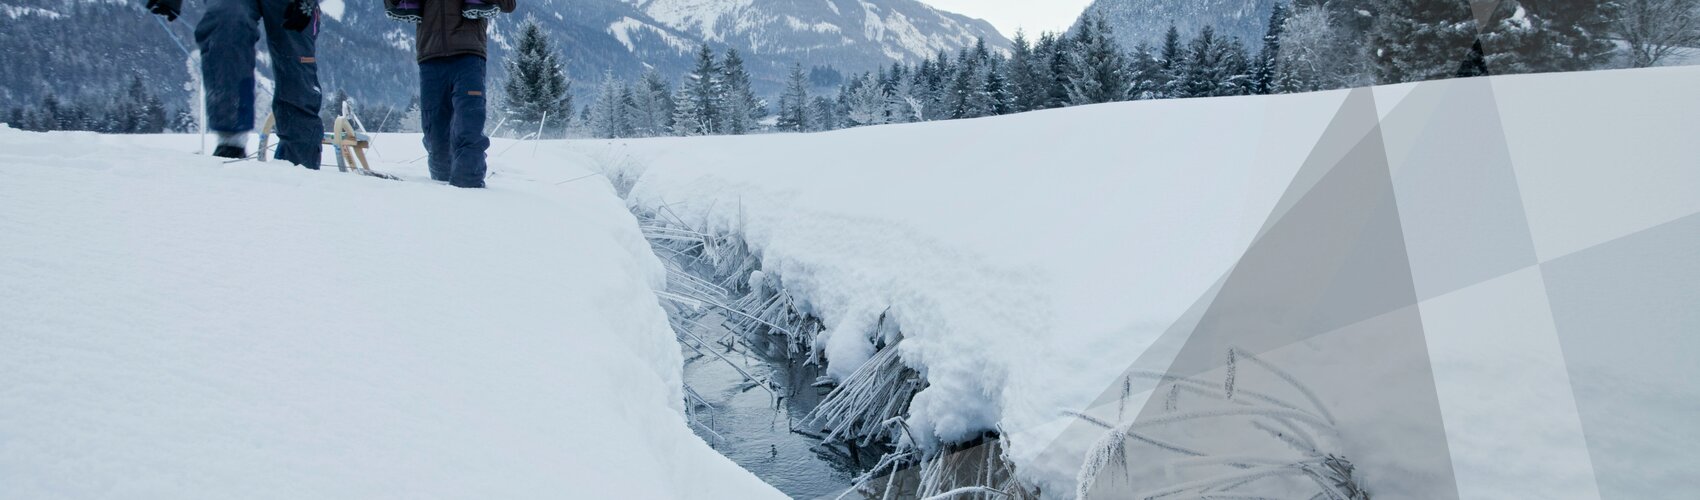 Winterwandern Ehrwald-Lermoos | © Tiroler Zugspitz Arena | U. Wiesmeier